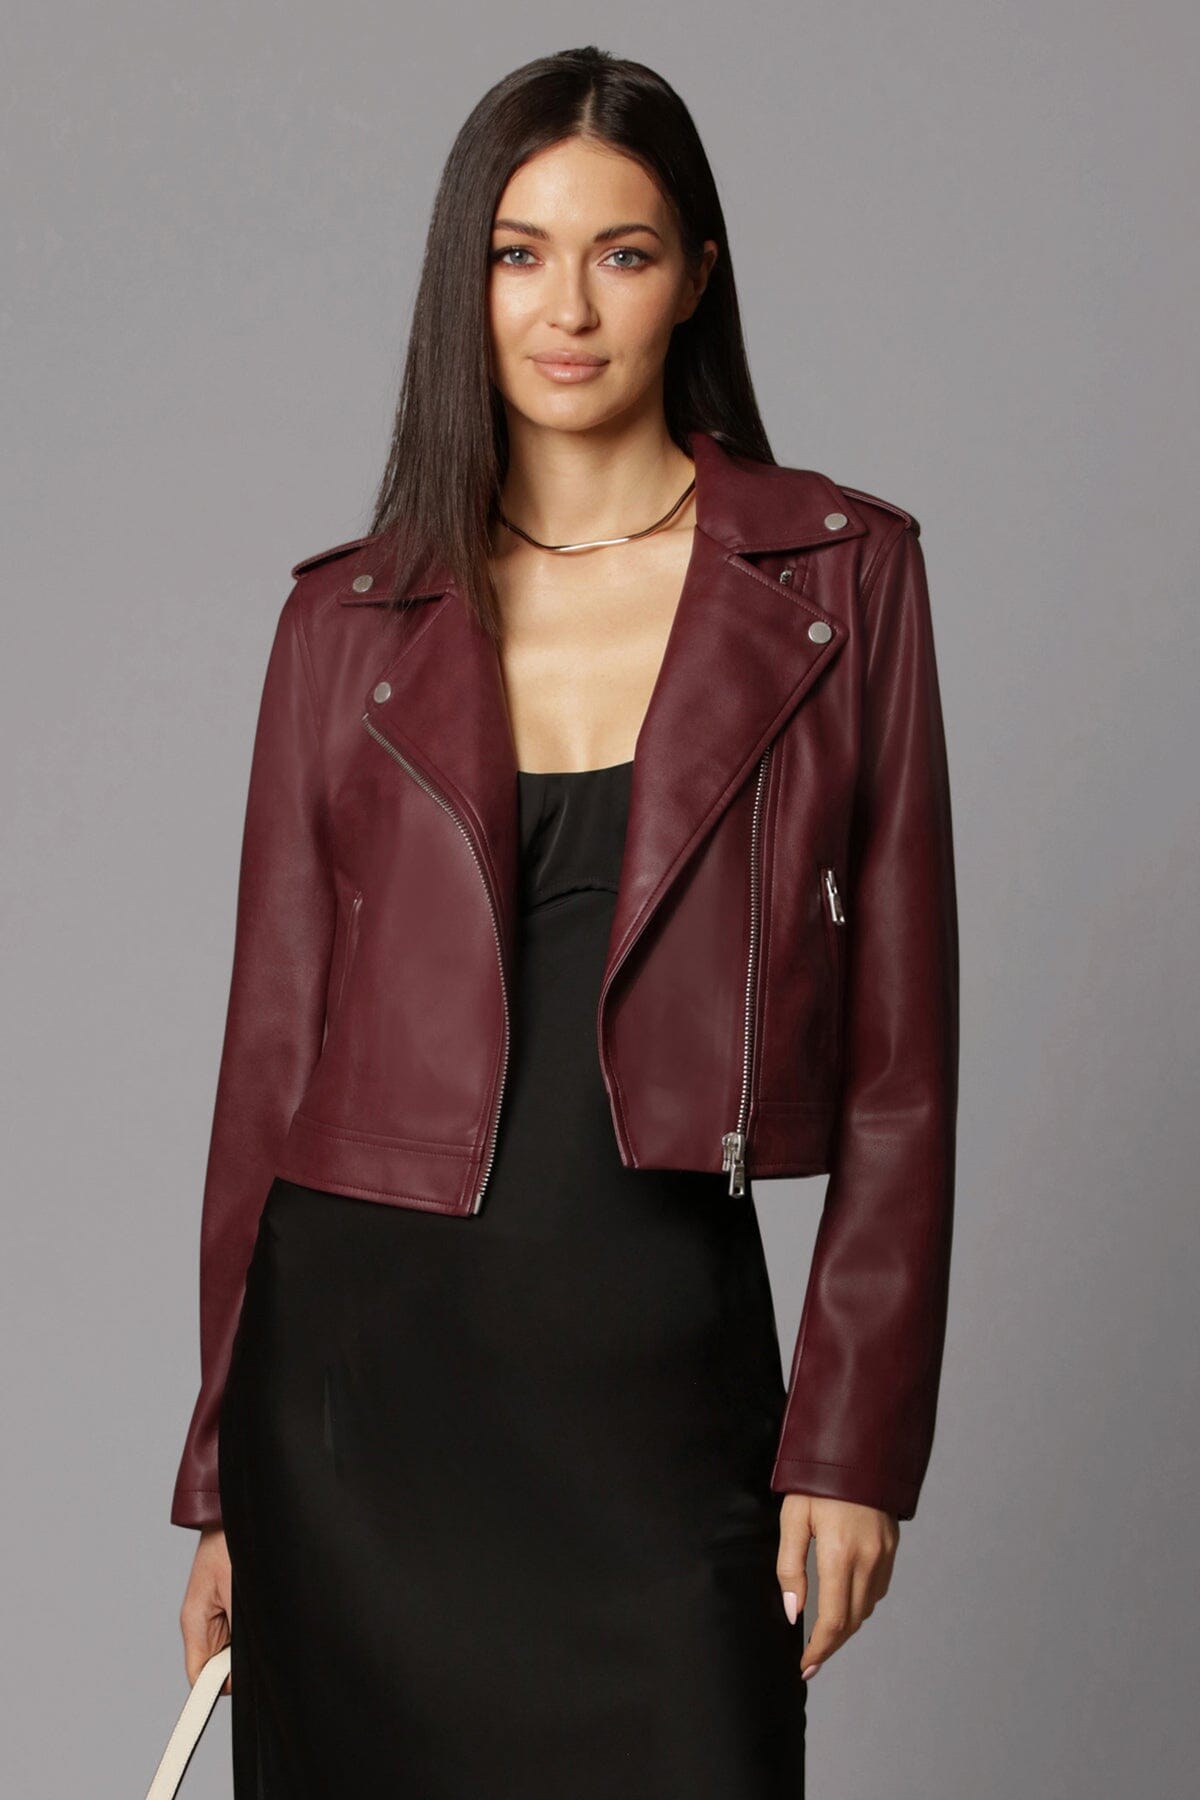 faux ever leather classic biker jacket zinfandel red - women's figure flattering designer fashion date night jackets